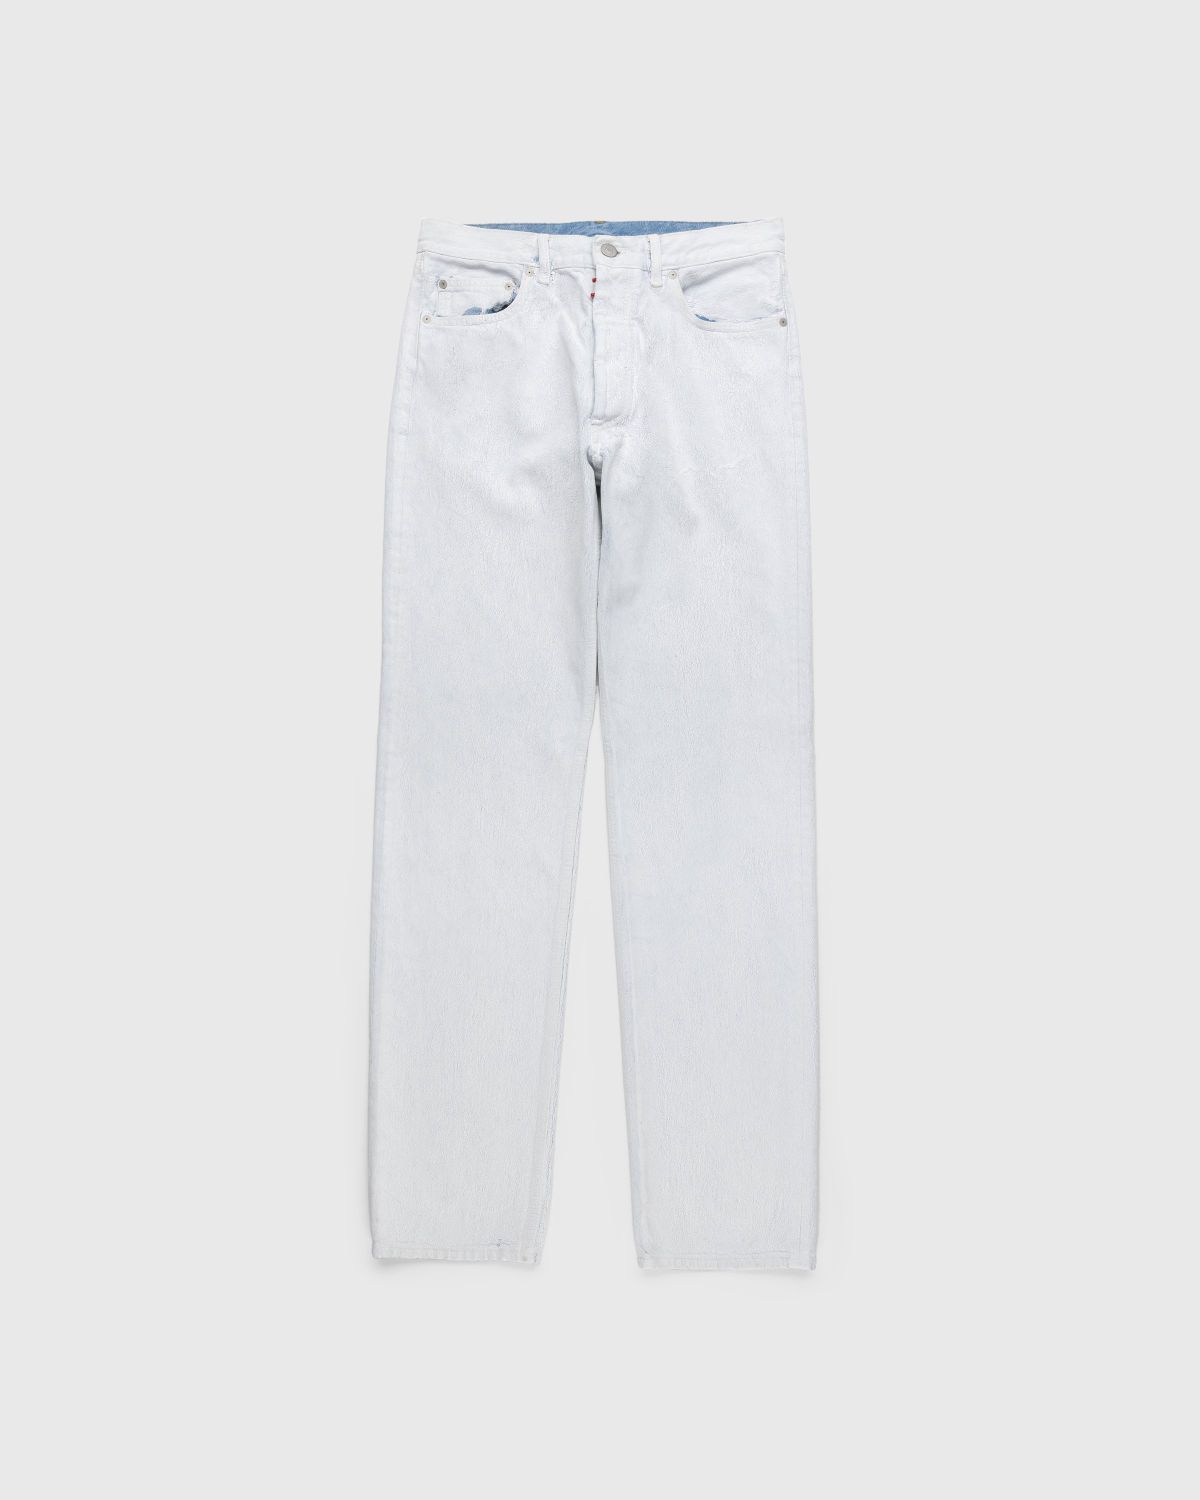 Maison Margiela – 5-Pocket Paint Jeans White - Denim - White - Image 1